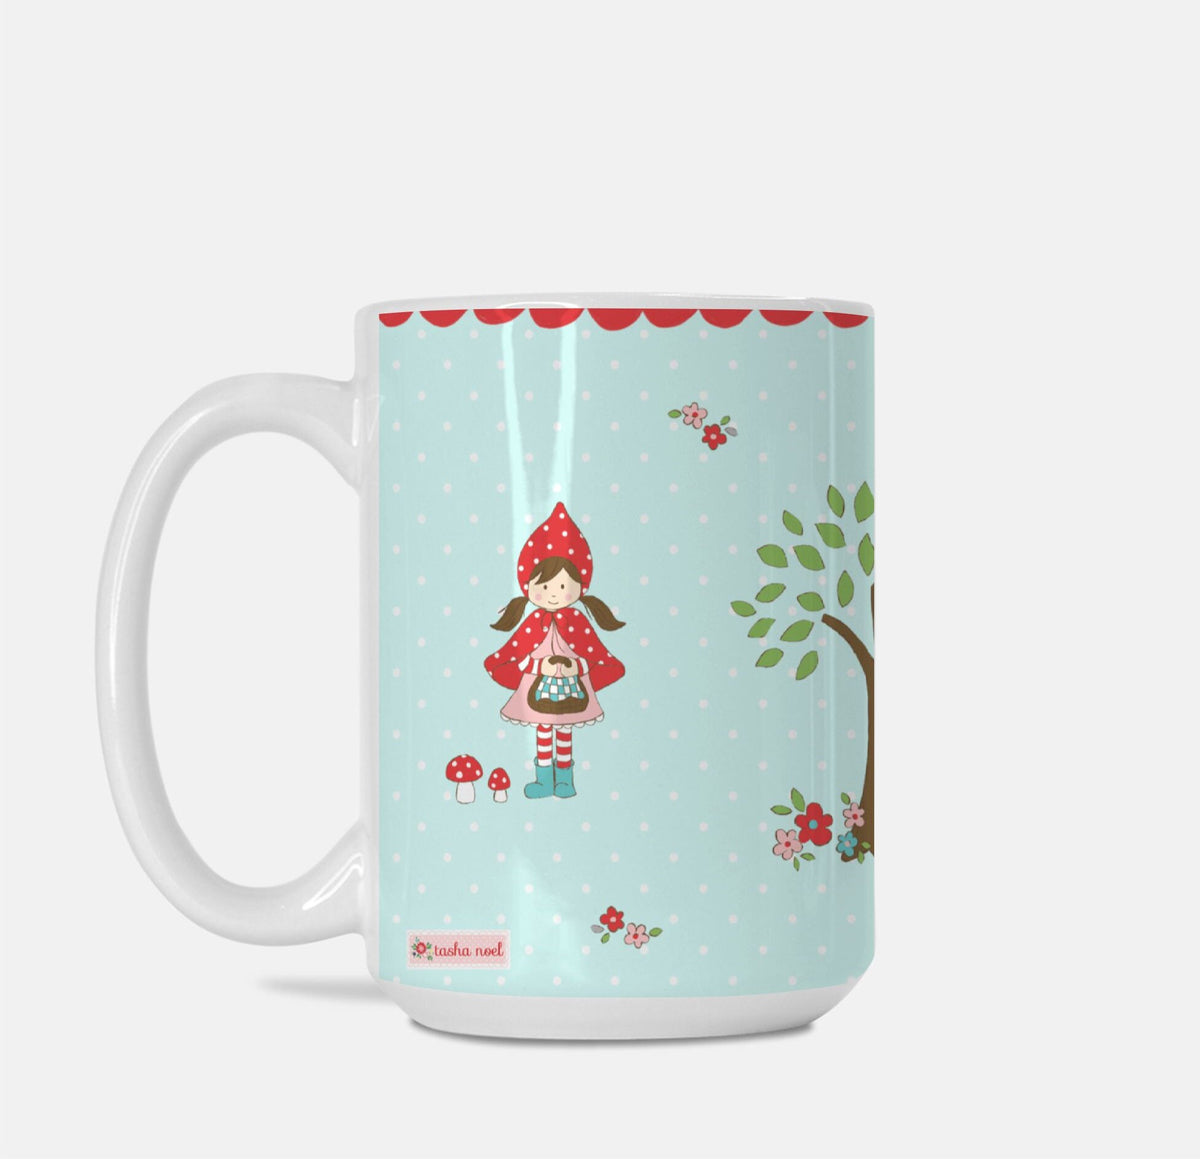 Little Red Riding Hood Mug - 15oz